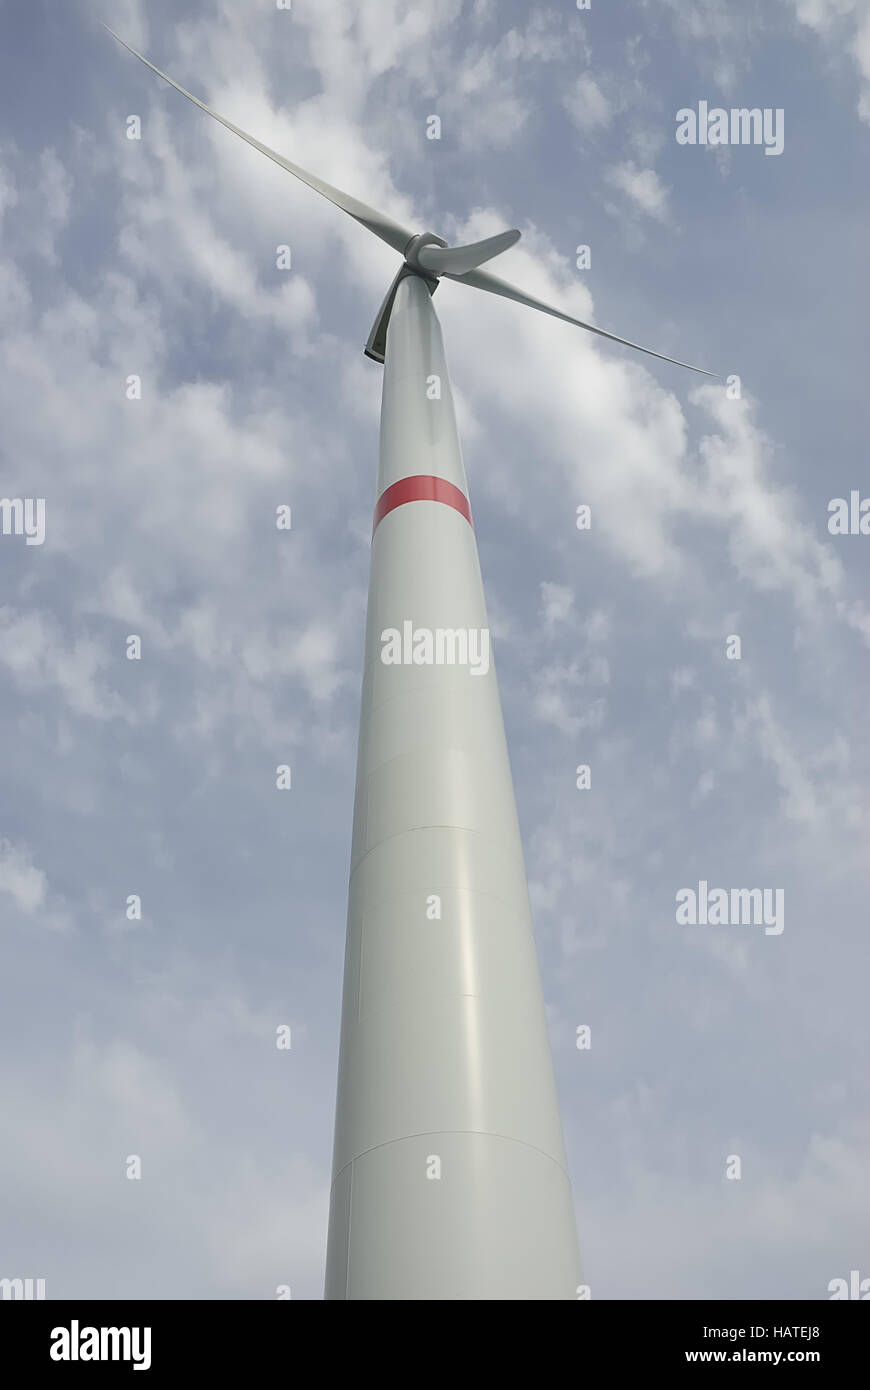 Windrad 1 - energia eolica 1 Foto Stock